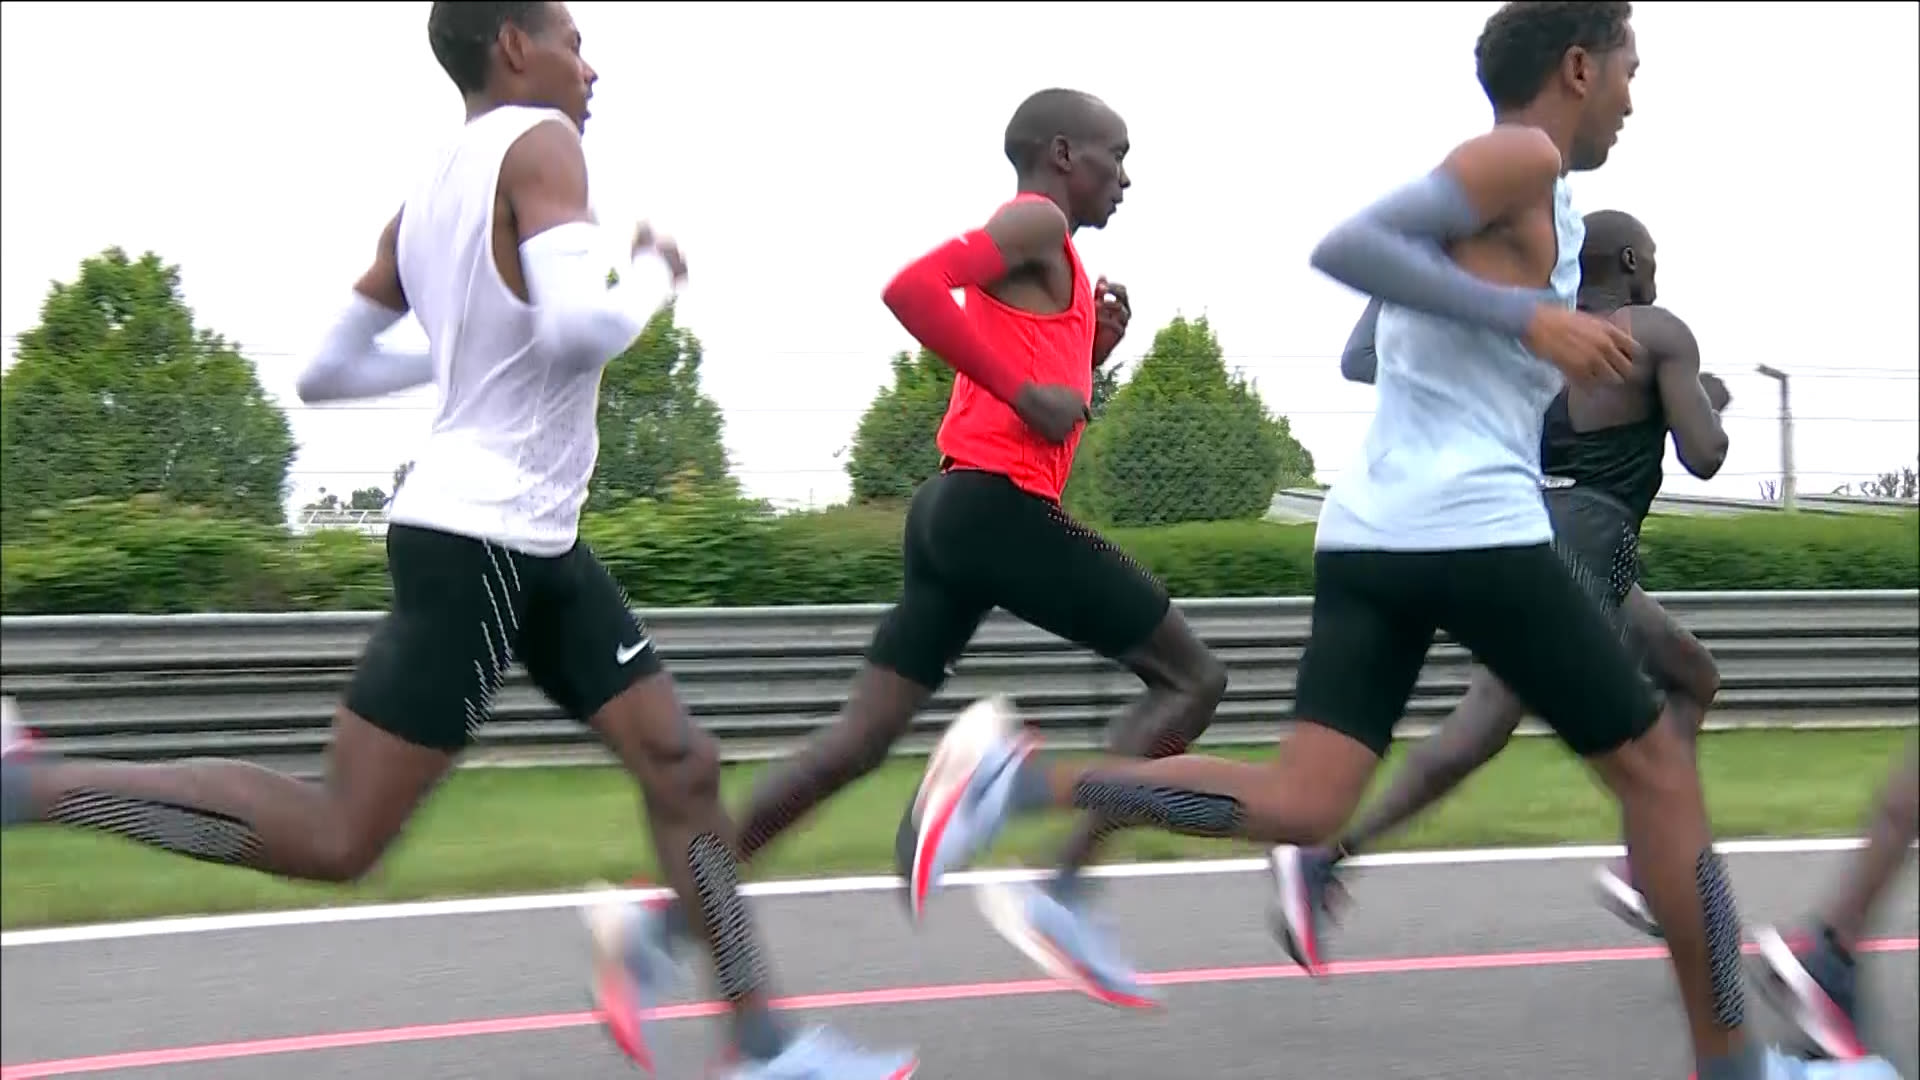 En expansión Buscar Generalmente hablando Watch How Nike Nearly Cracked the Perfect Marathon | WIRED